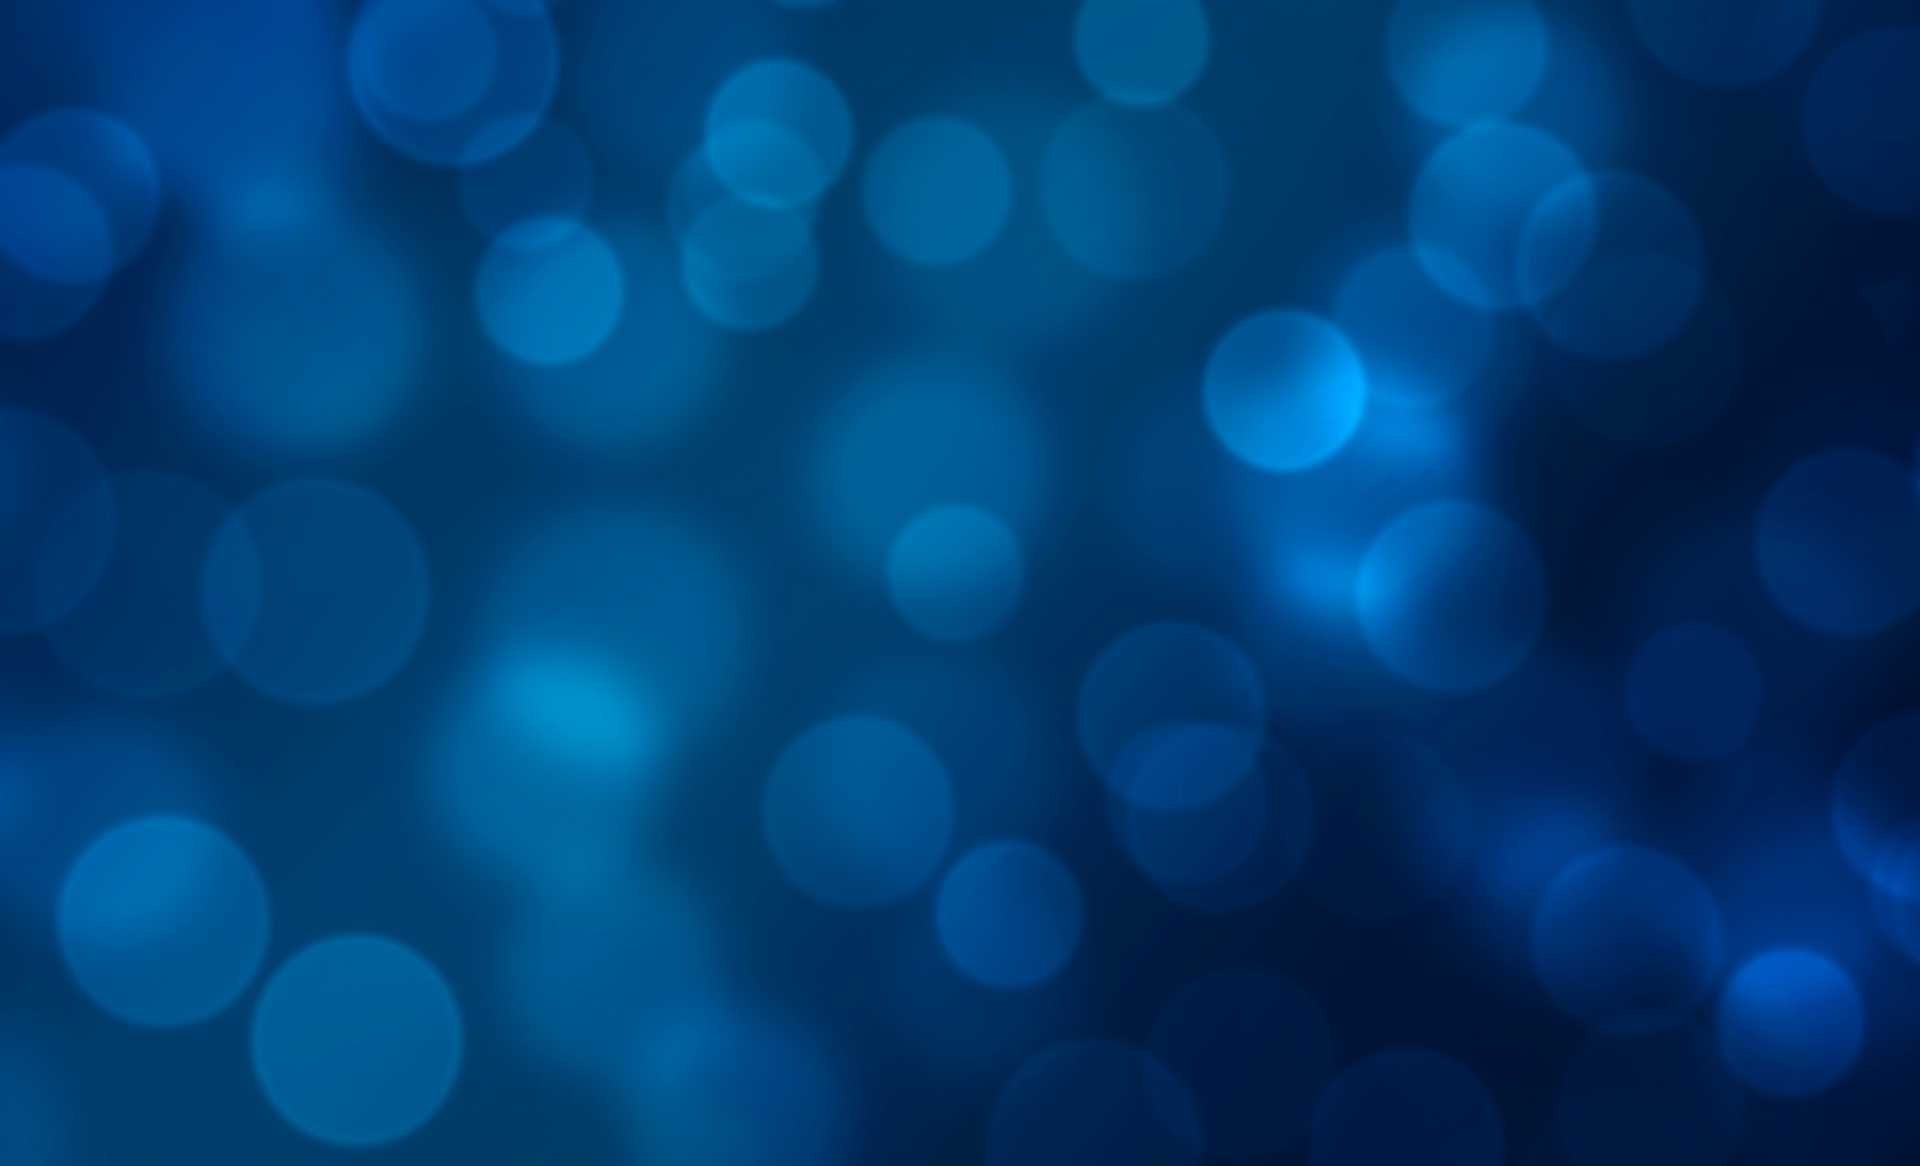 Blue background with blurred sparkling lights